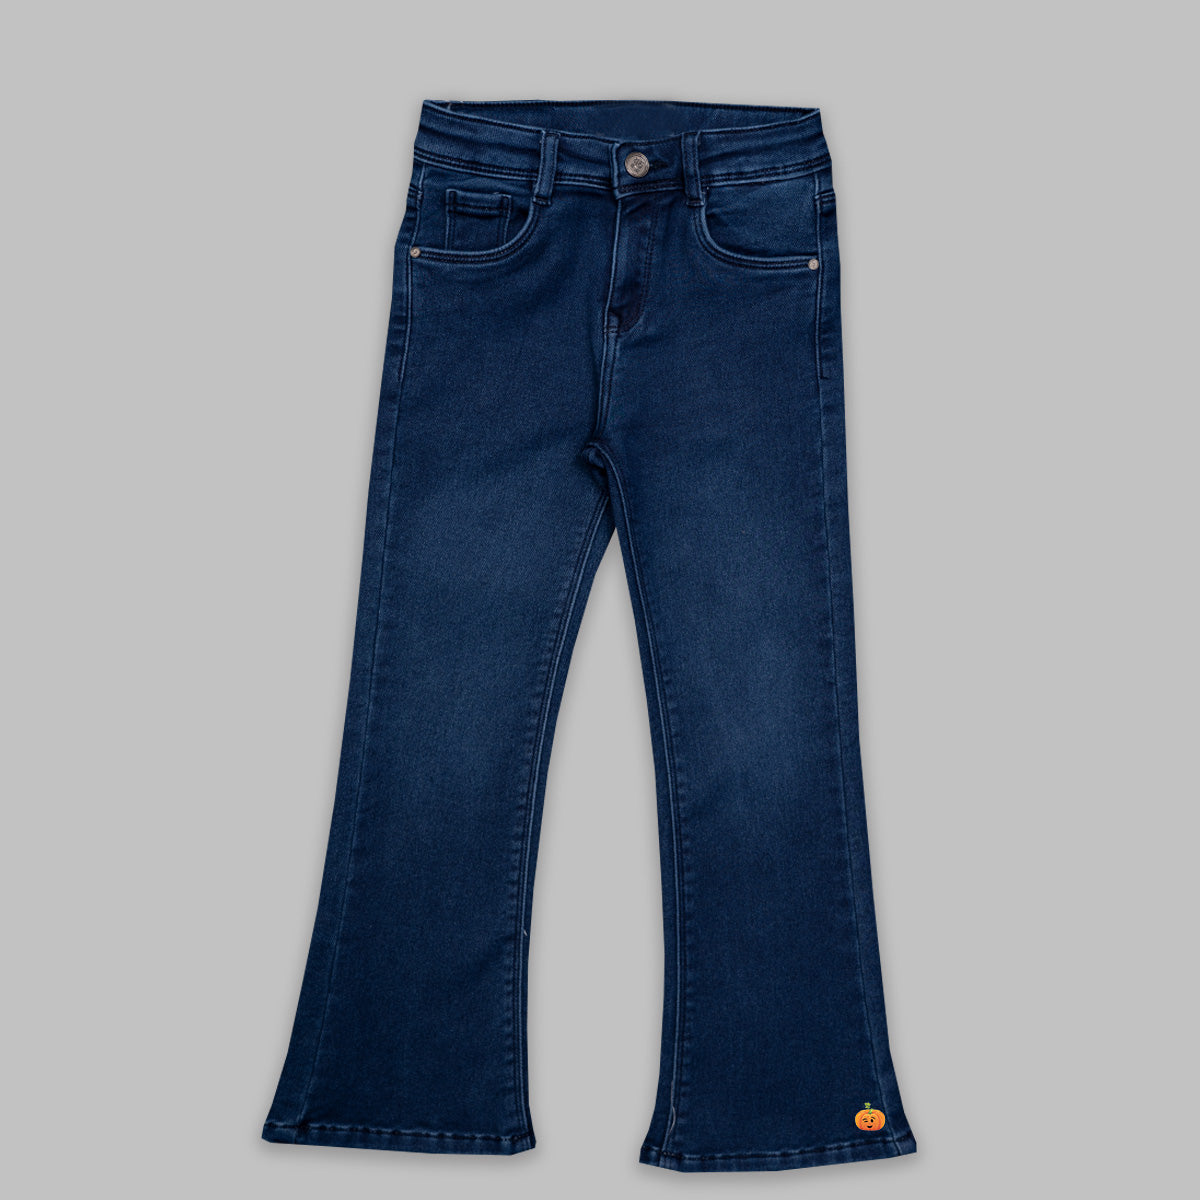 Shop Mufti Original Jeans Online